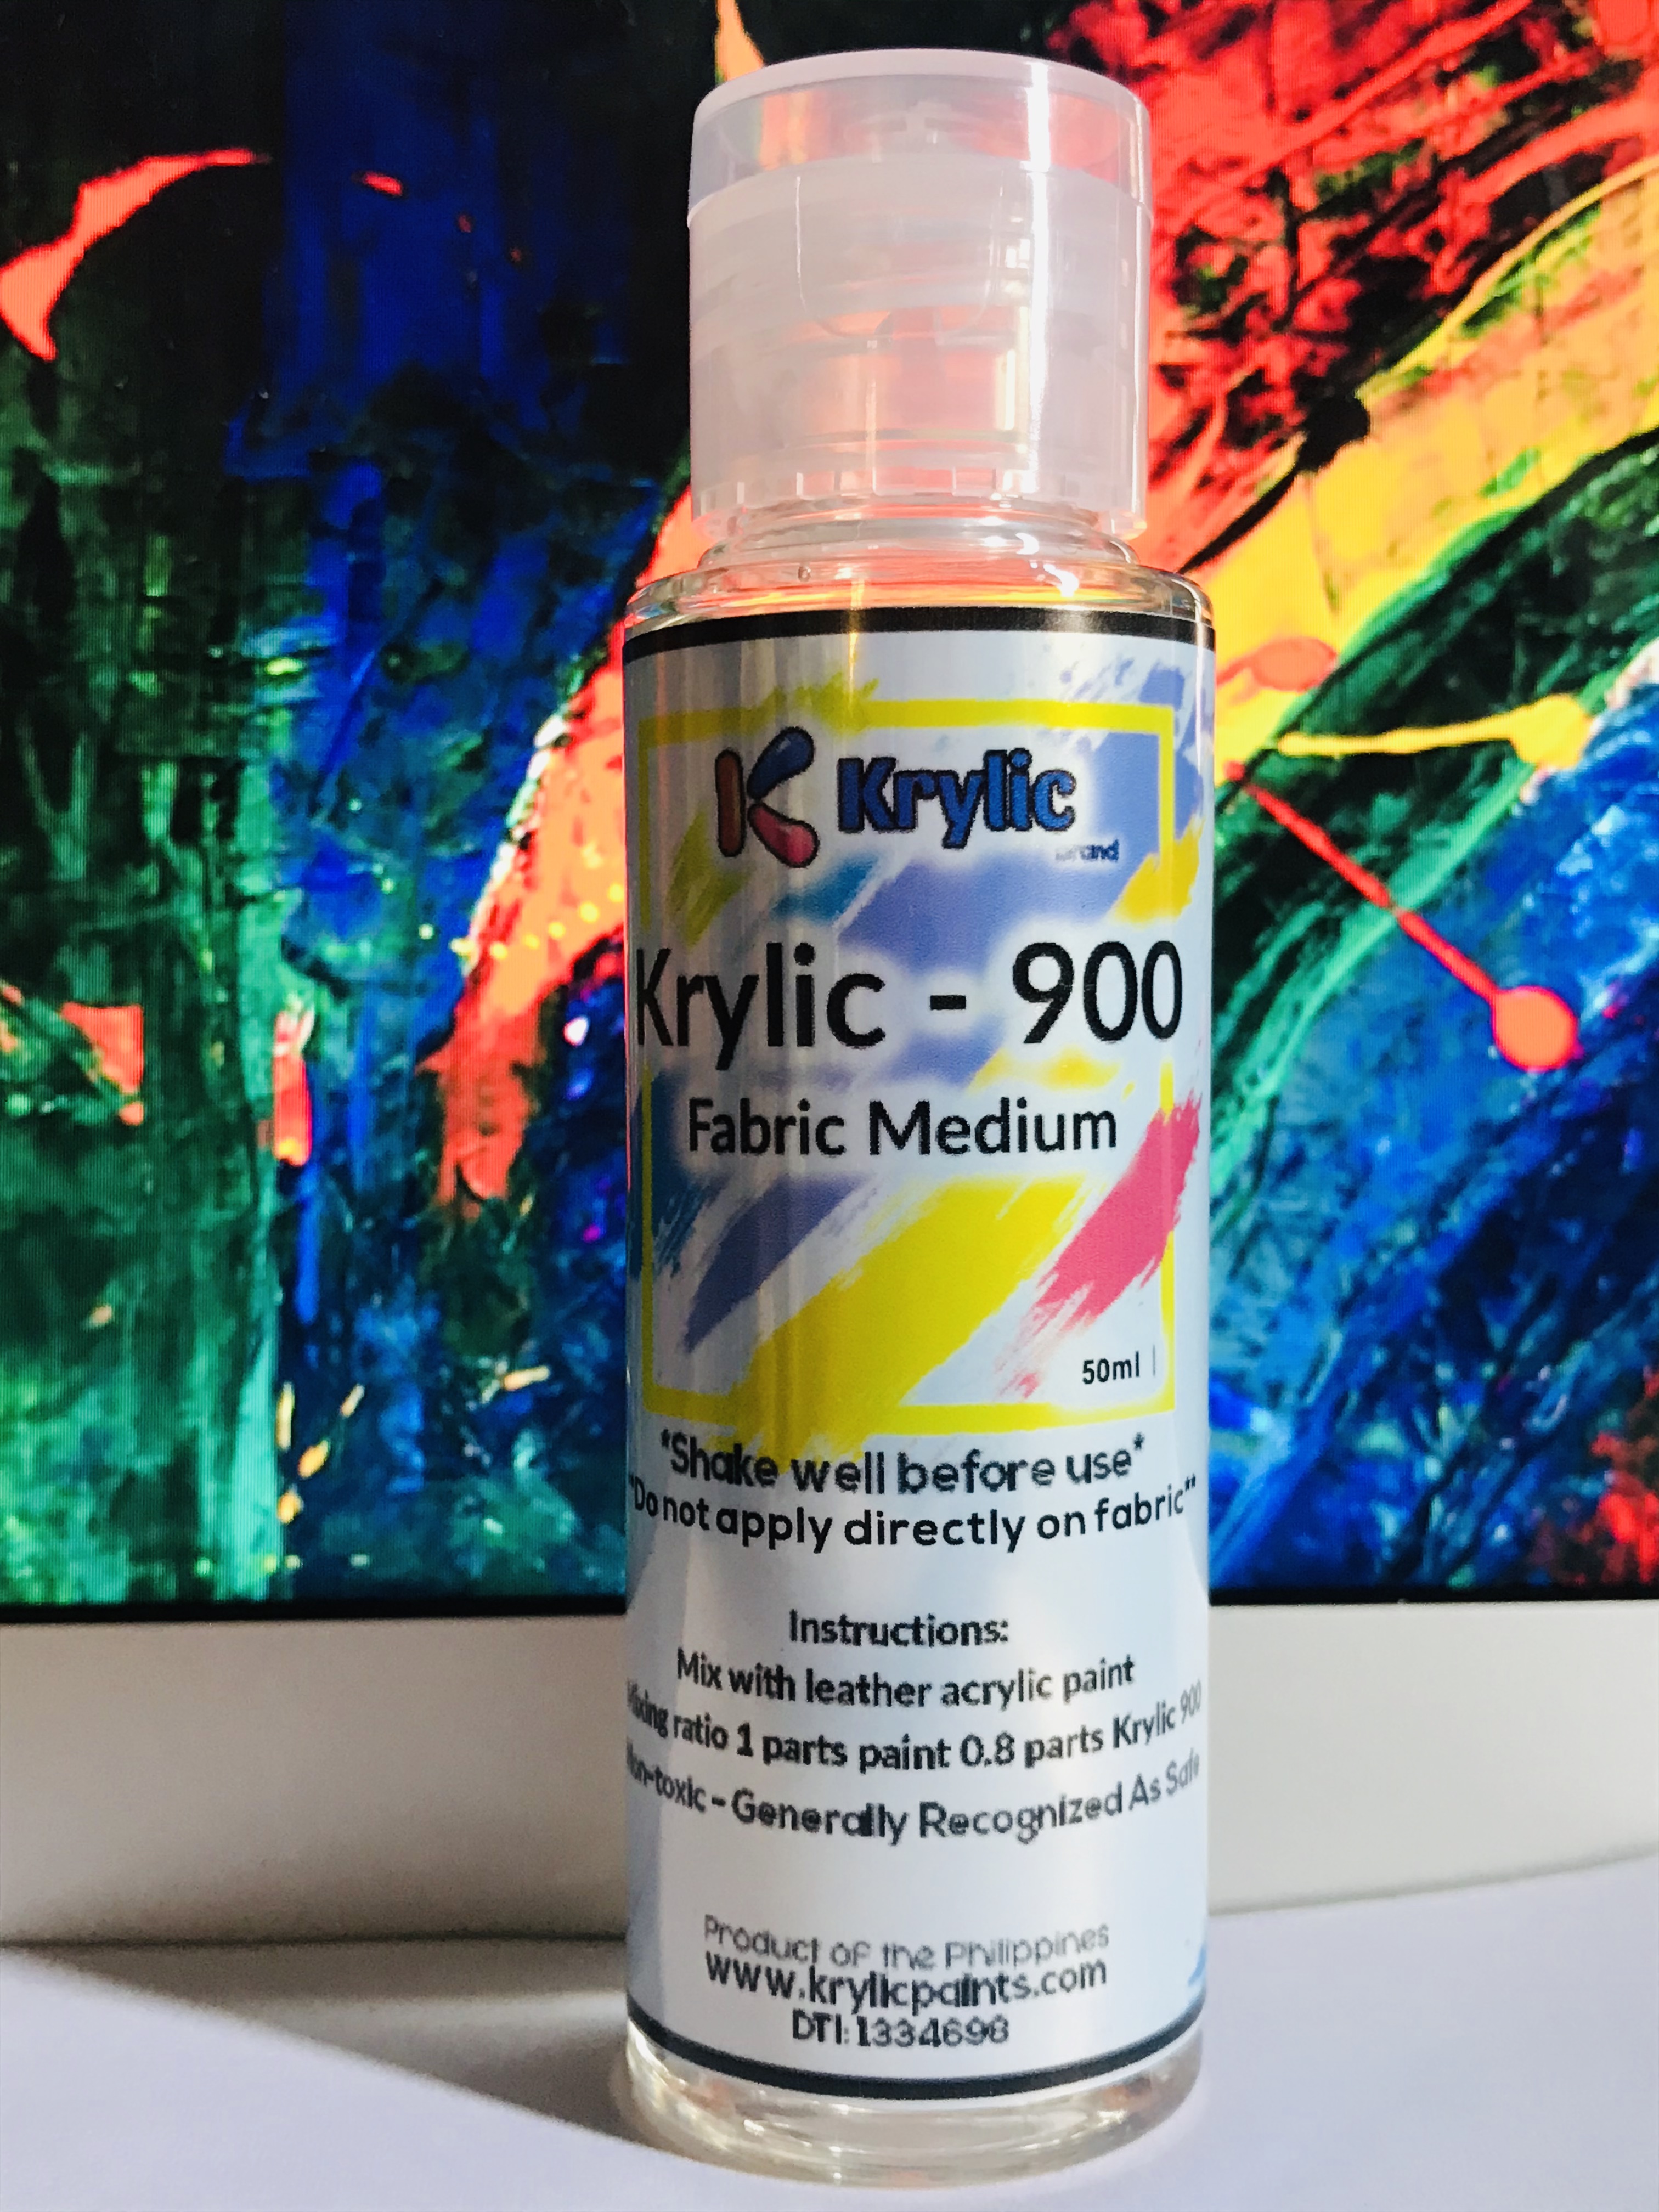 Krylic 900 Fabric Painting Medium - GAC 900 Alternative